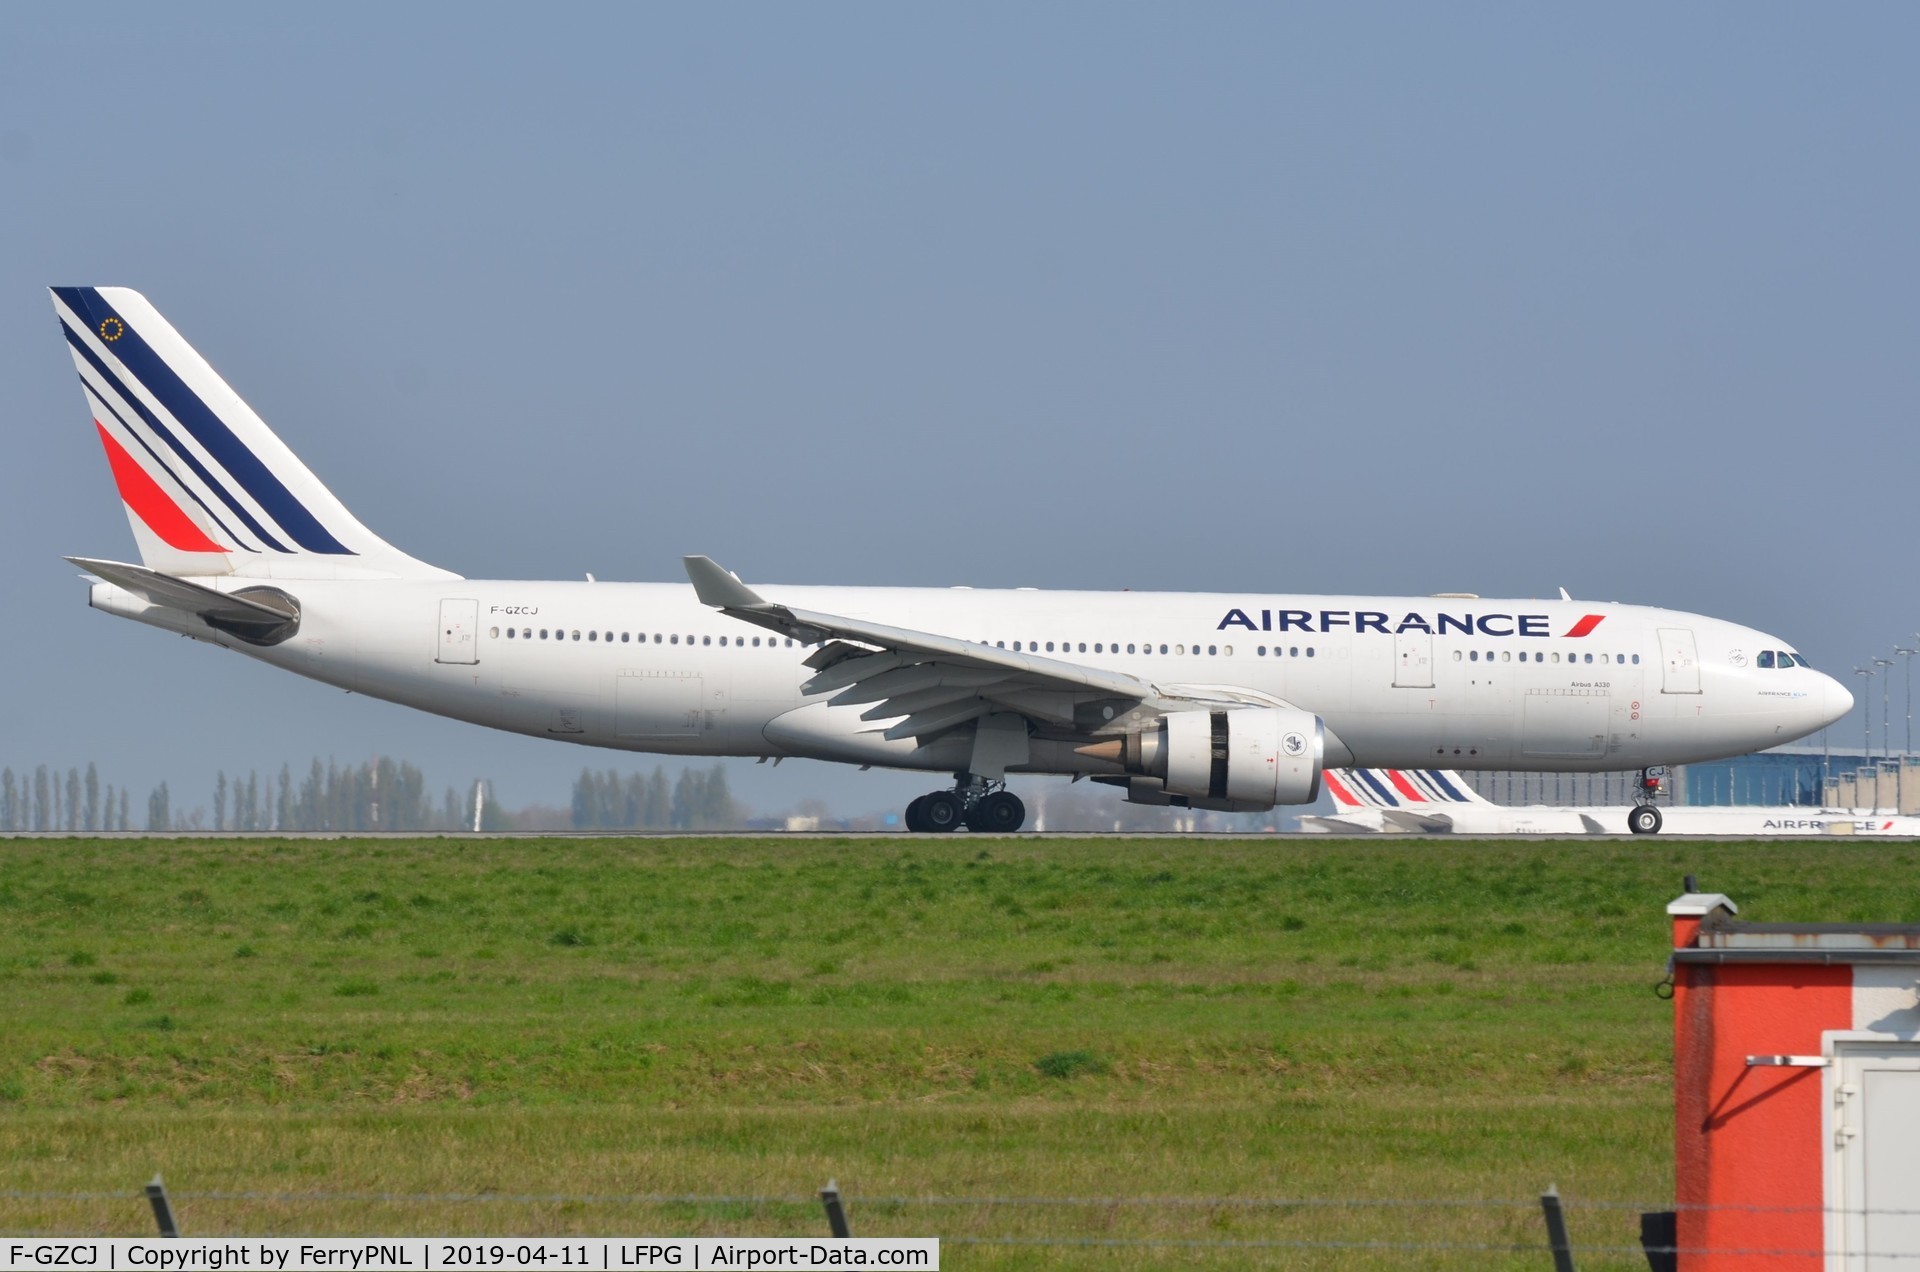 F-GZCJ, 2002 Airbus A330-203 C/N 503, Arrival of Air France A332